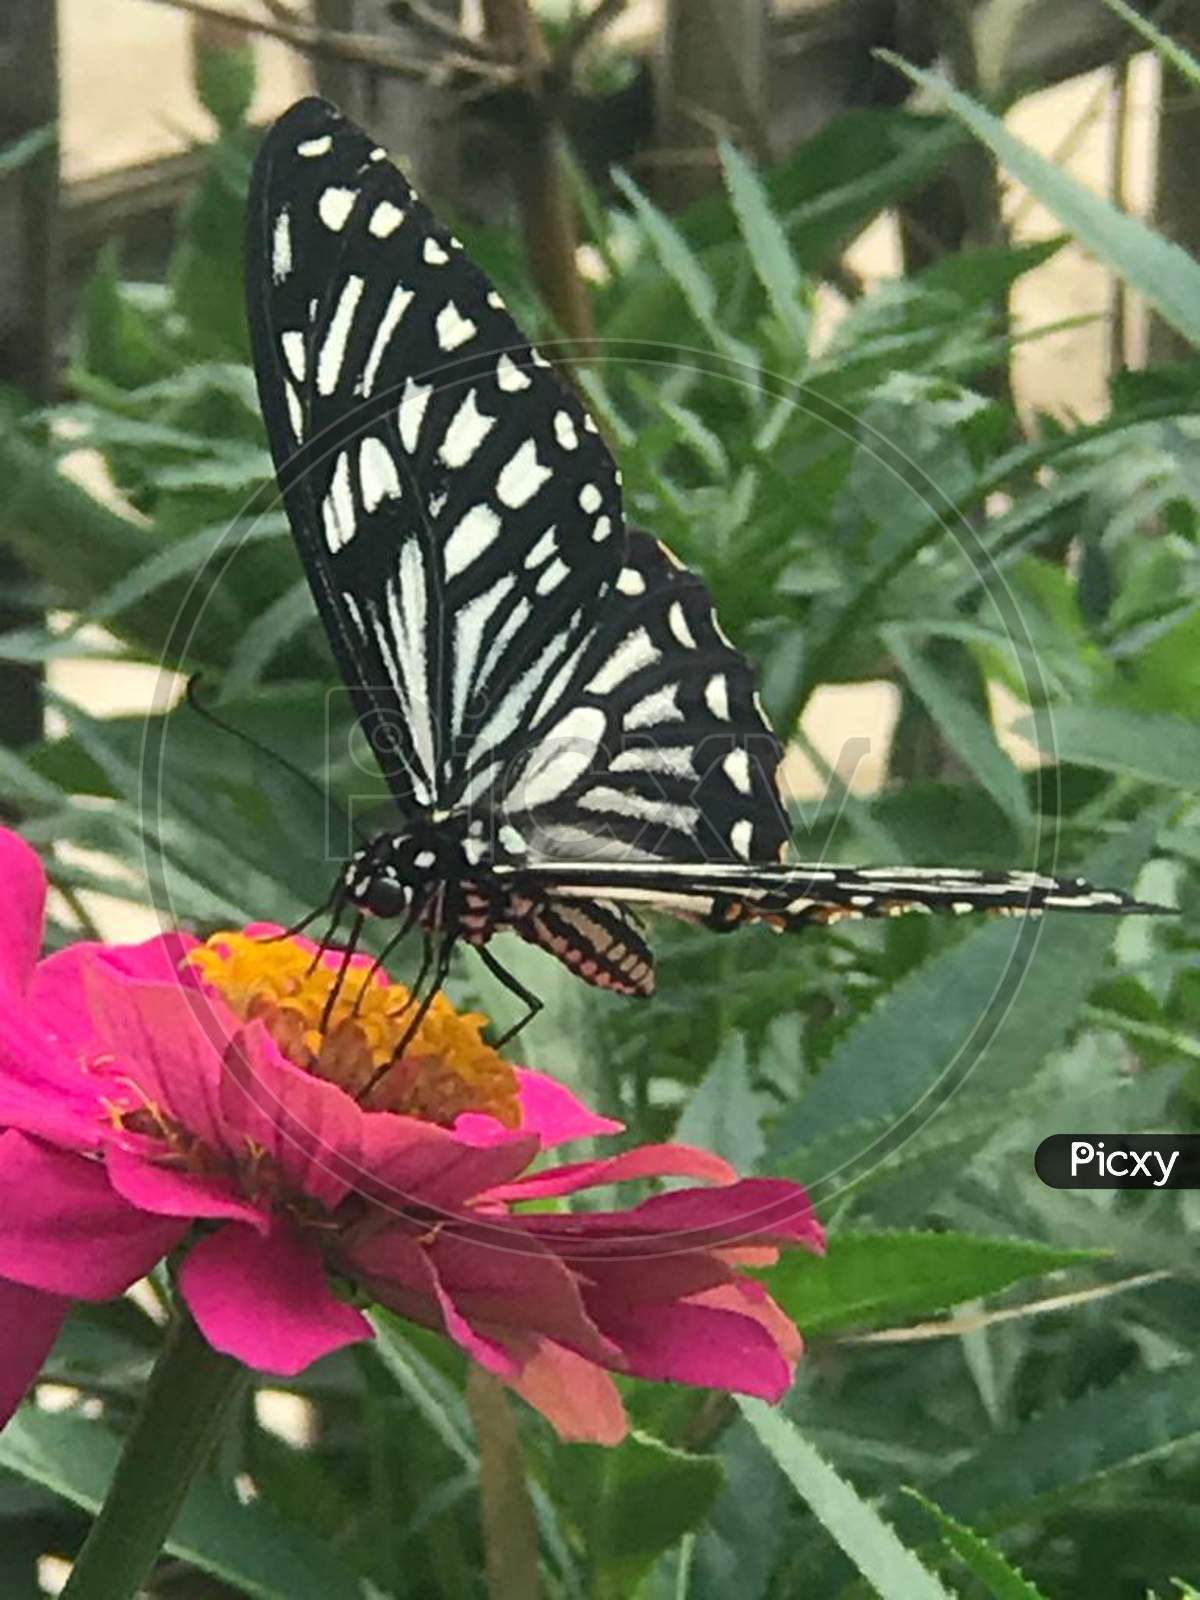 A butterfly on flower